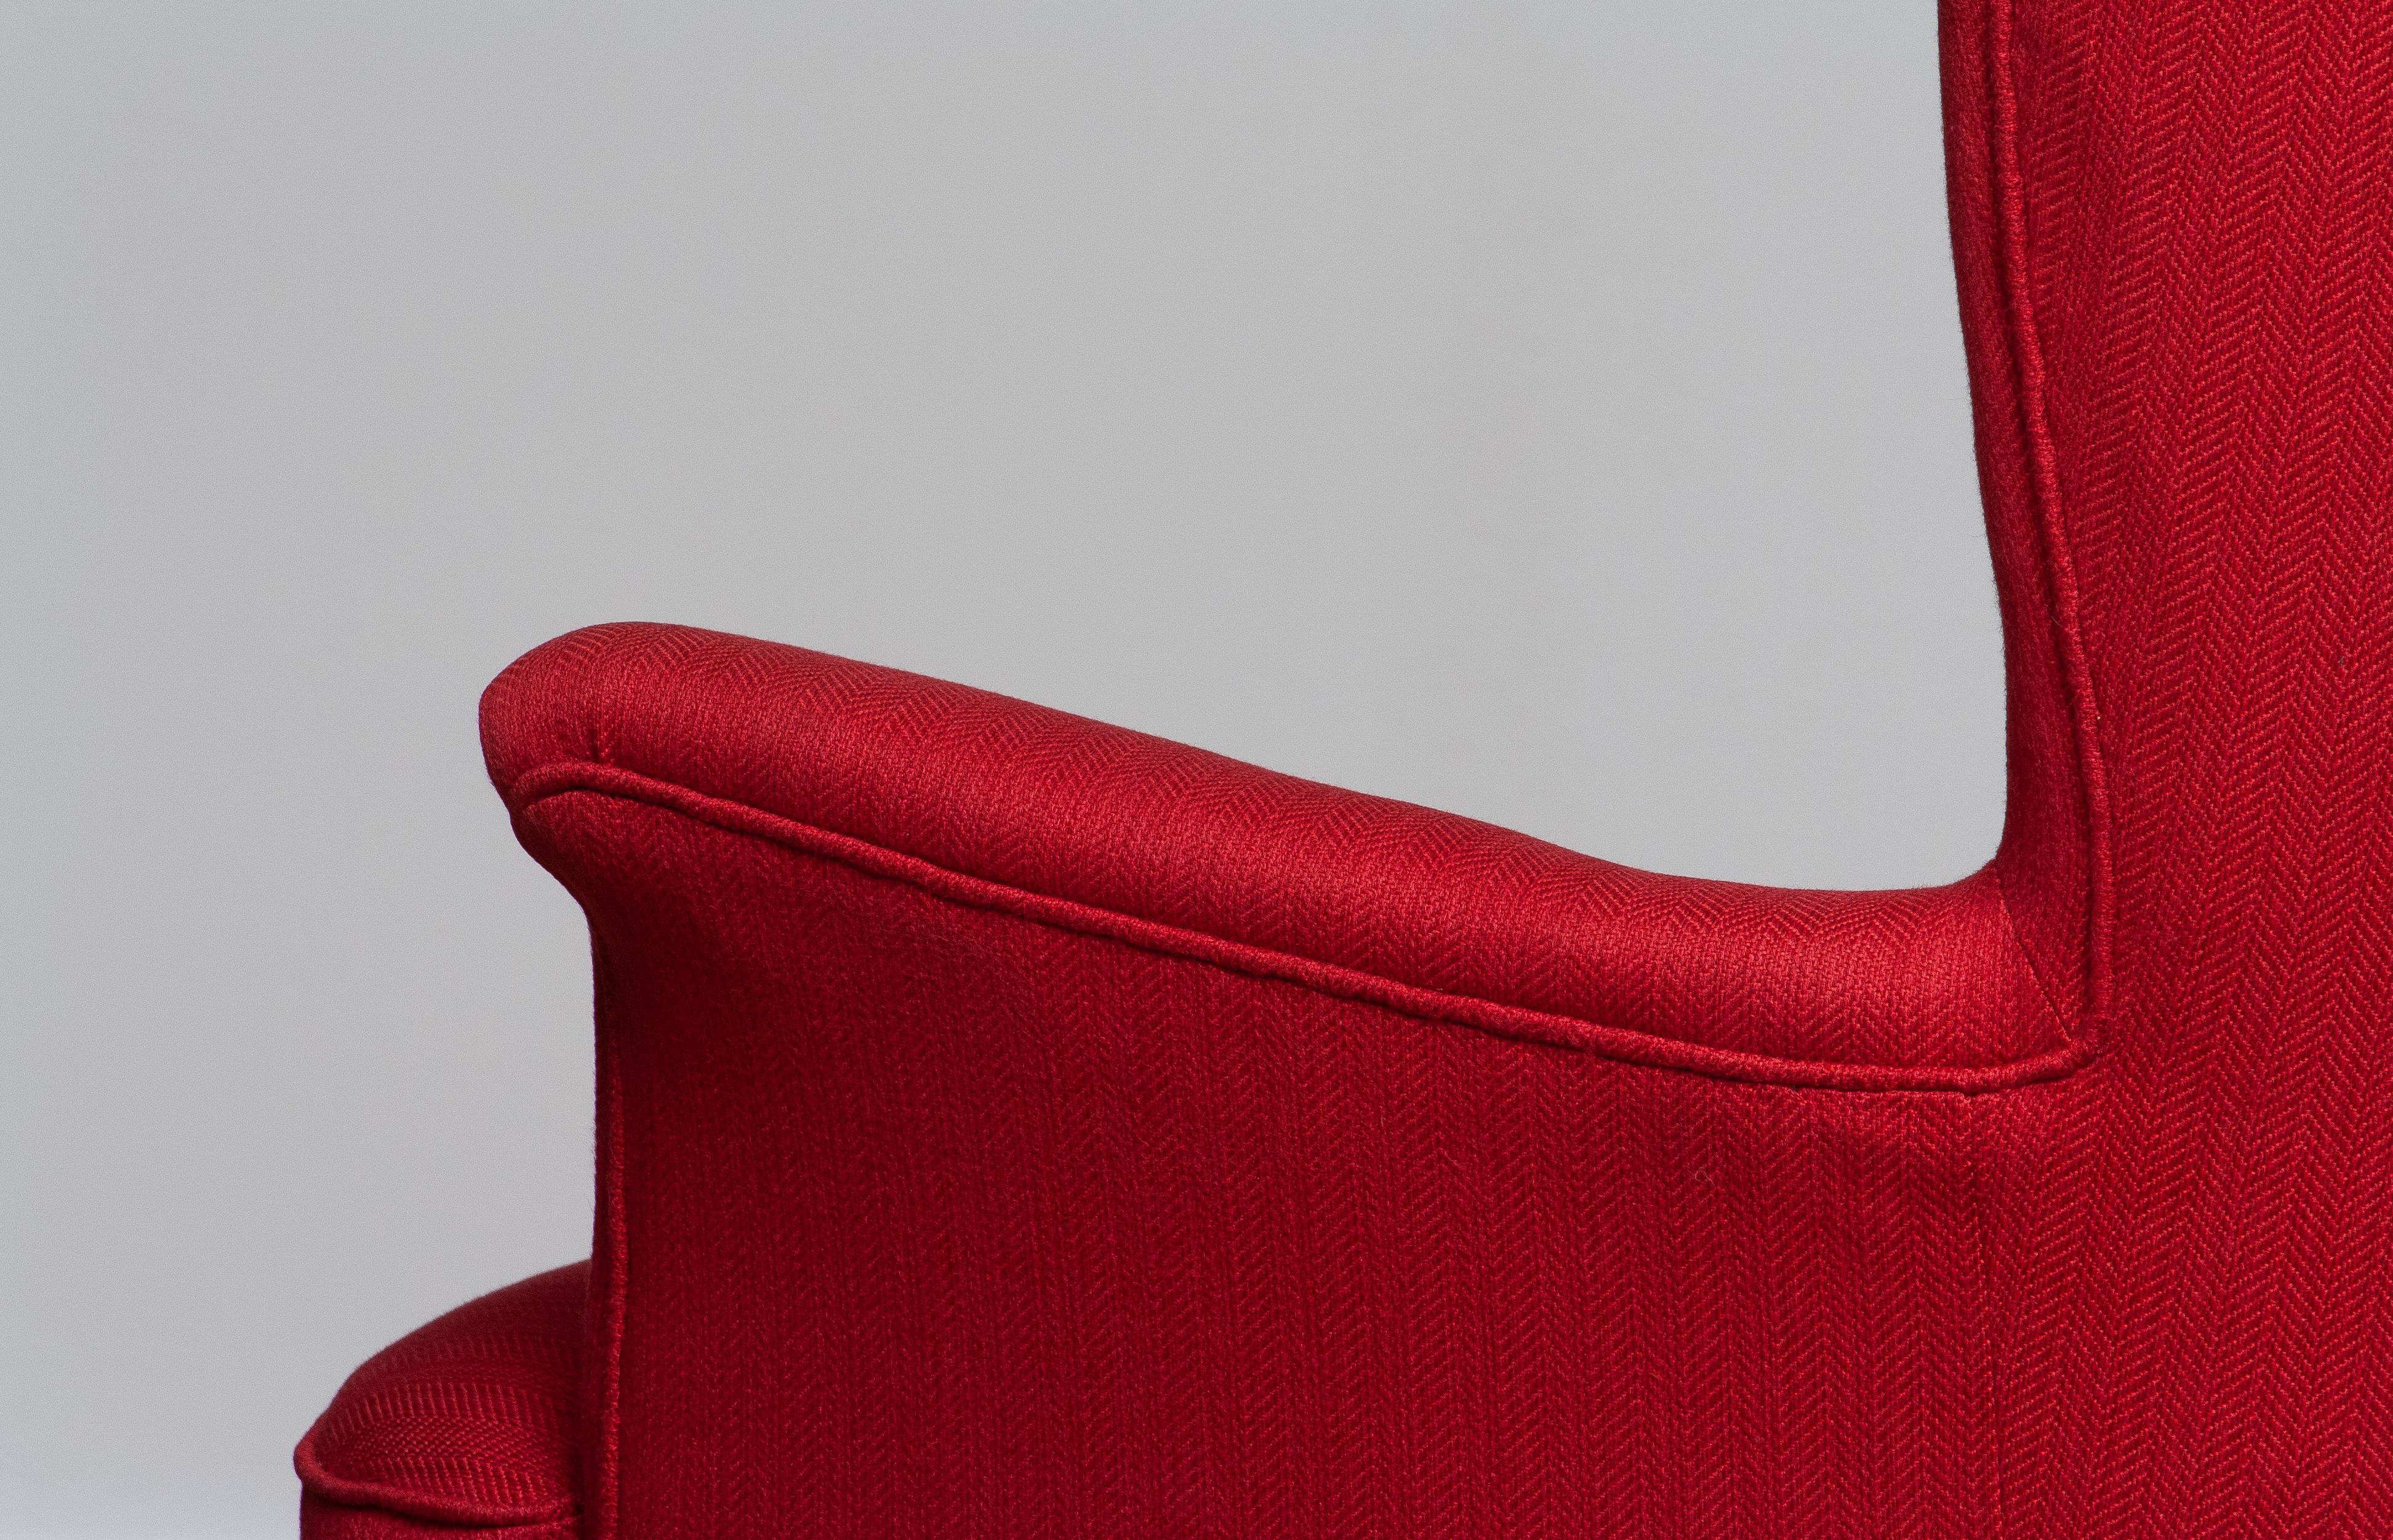 1940s, Fuchsia Red Club Lounge Chair by Carl Malmsten for OH Sjogren, Sweden 1